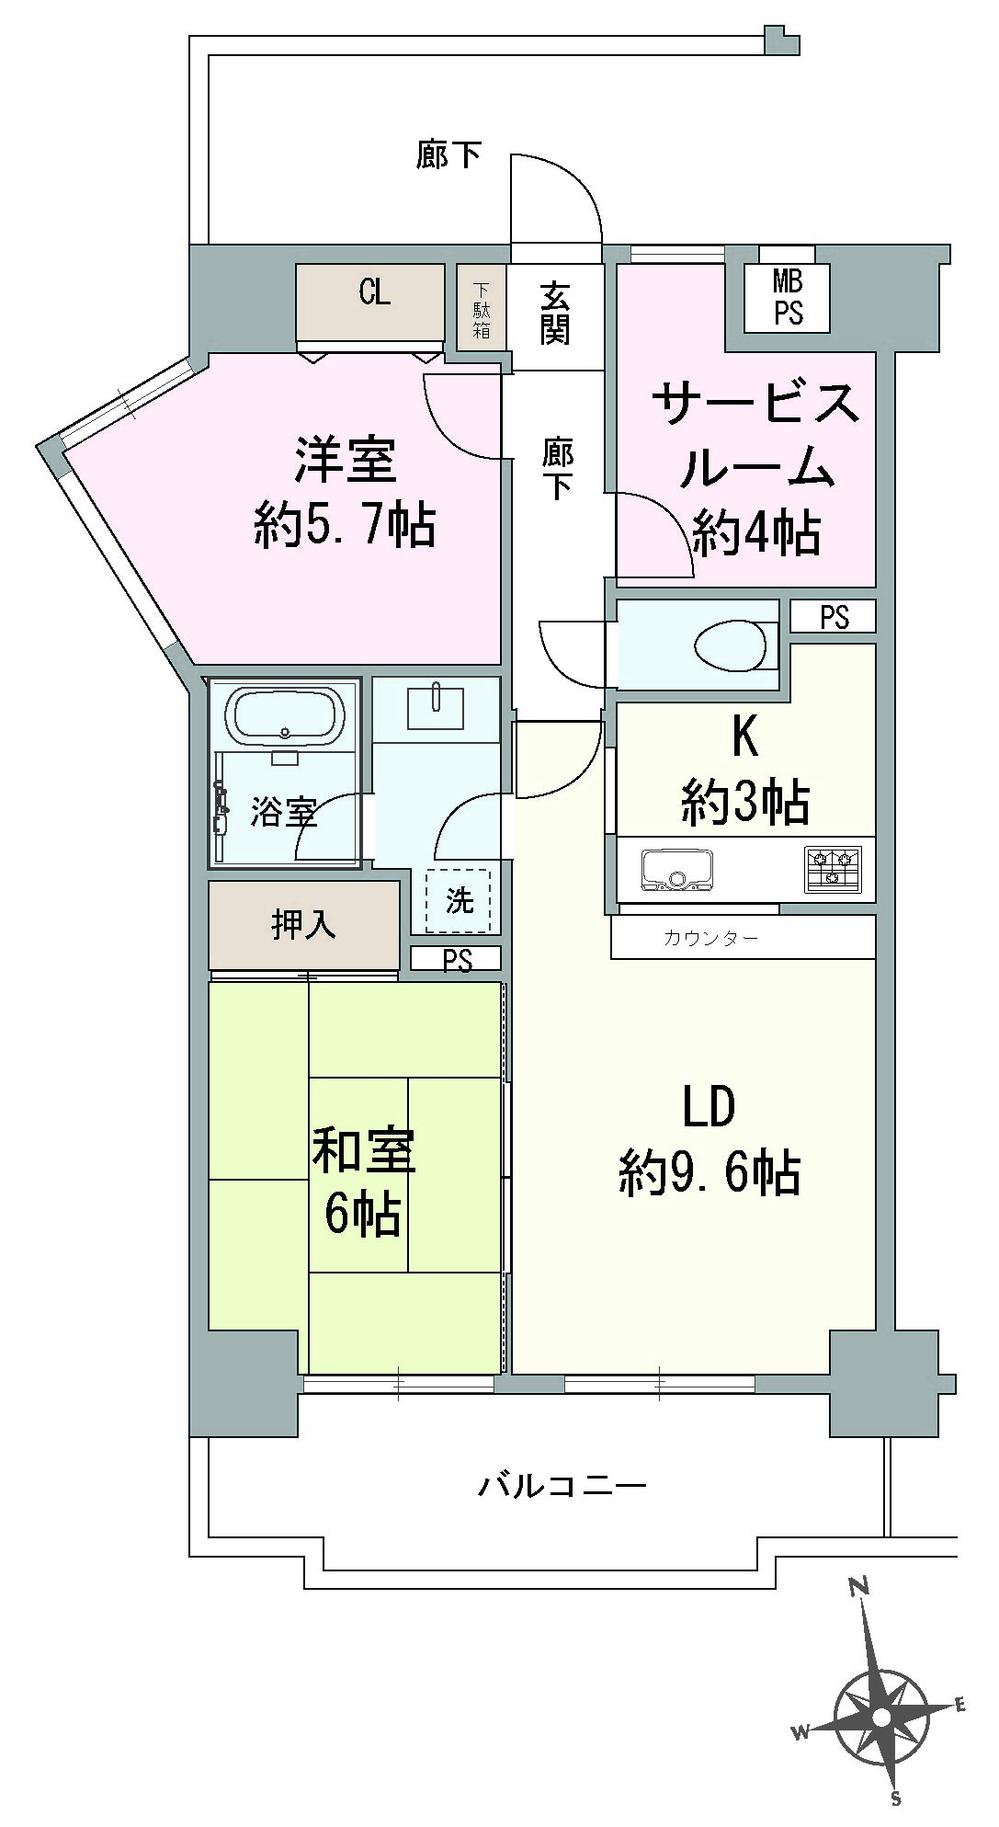 Floor plan. 2LDK + S (storeroom), Price 23.8 million yen, Occupied area 61.95 sq m , Balcony area 10.2 sq m